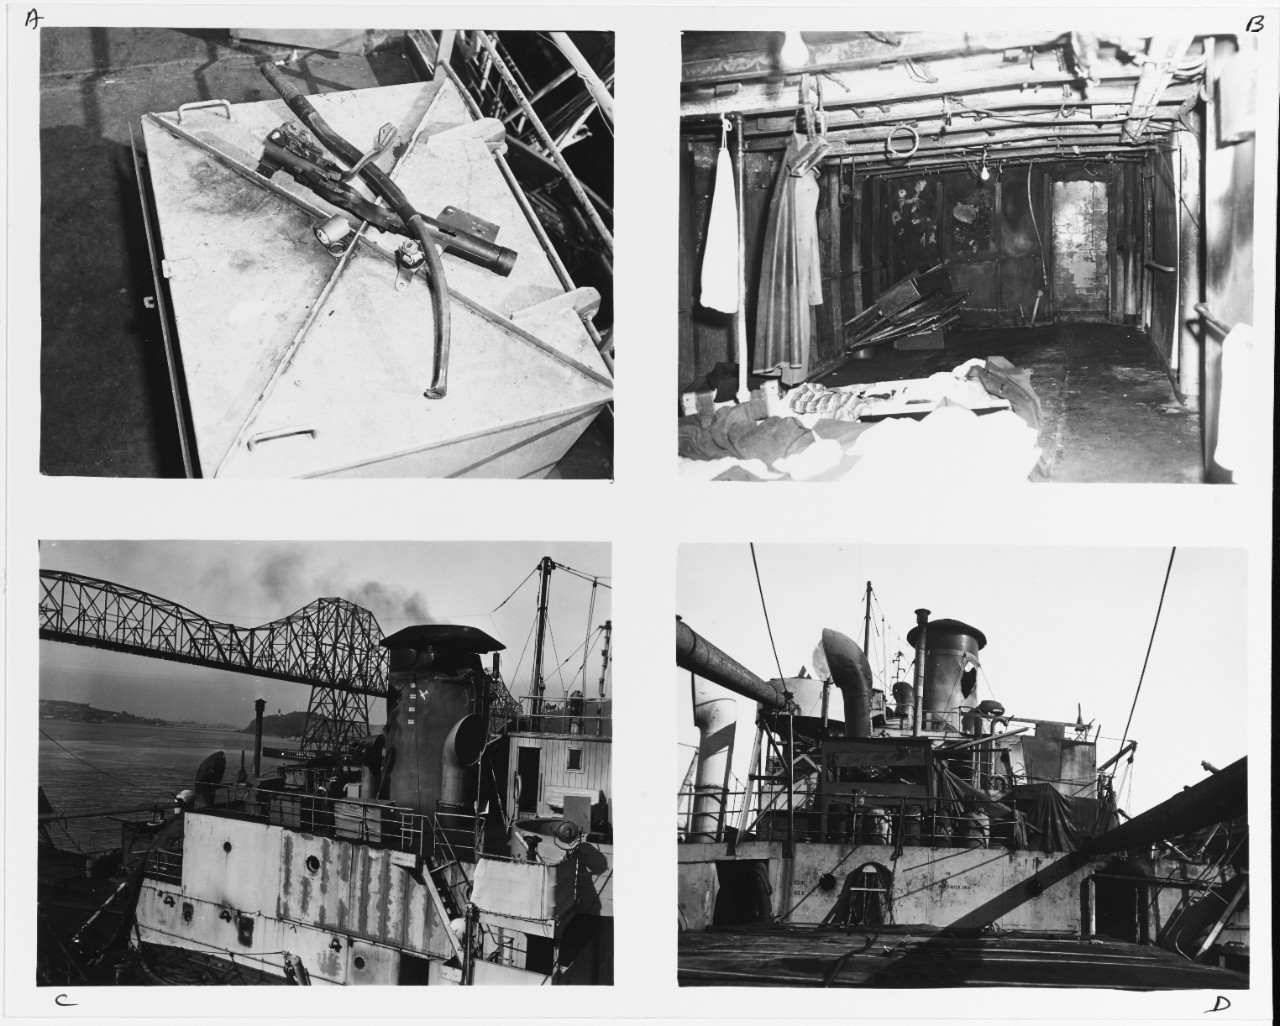 S.S. GILBERT STUART (U.S. Merchant Cargo Ship, 1943-1973)